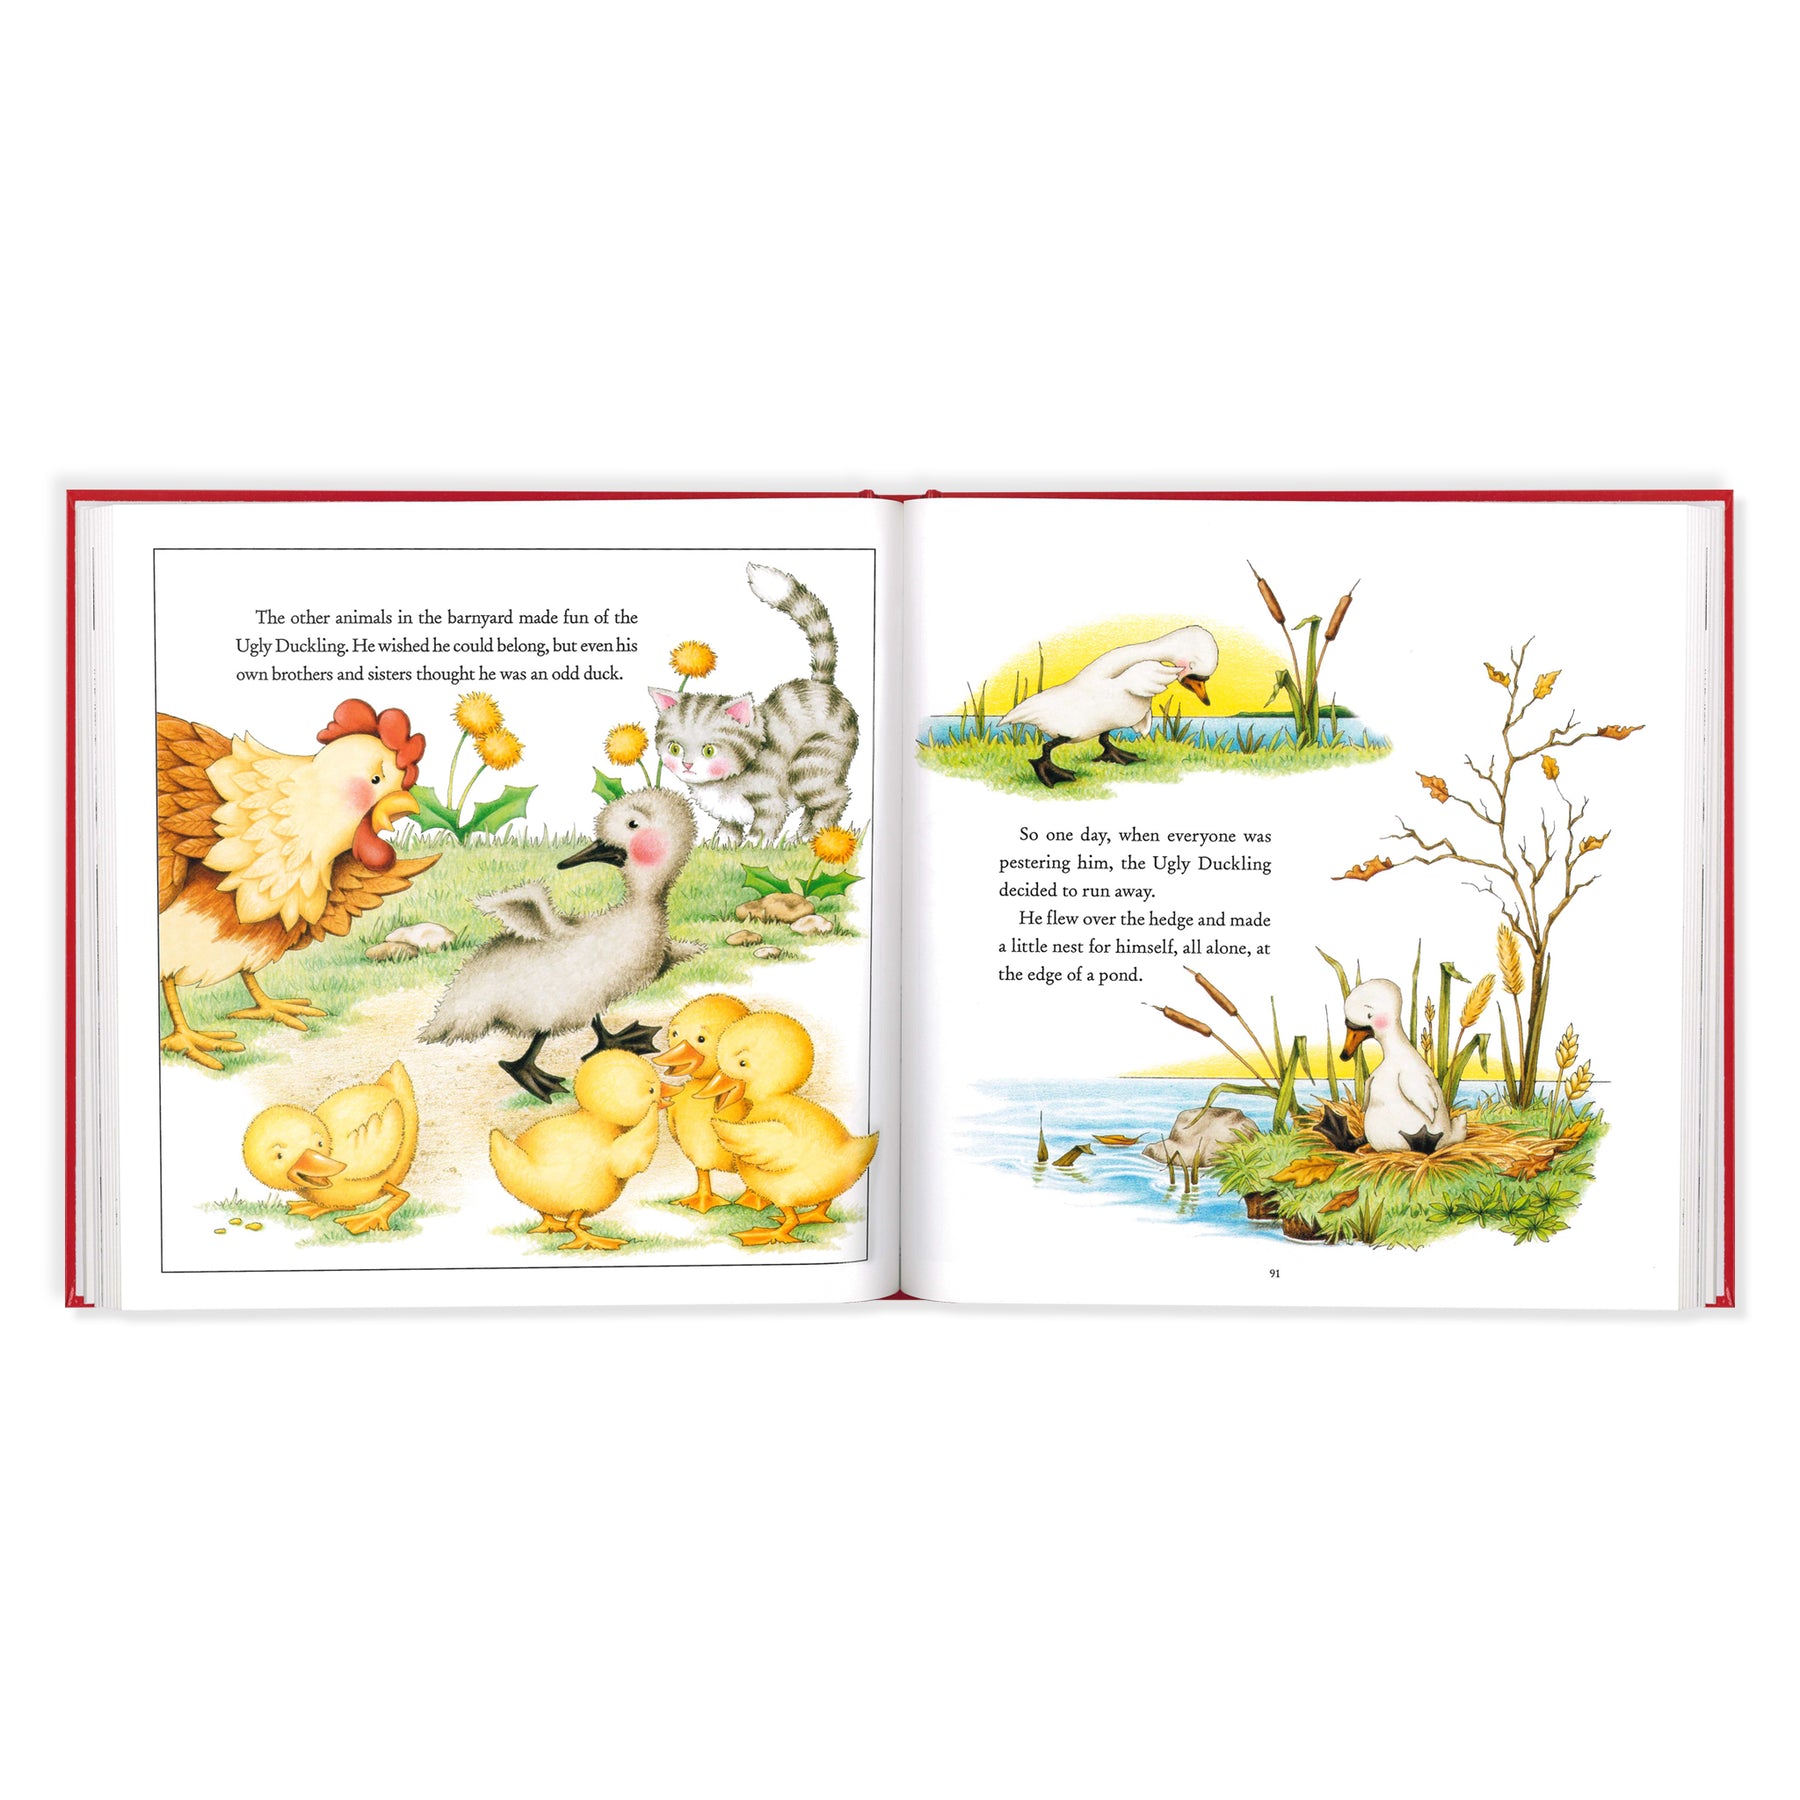 Nursery and Fairy Tales Storybook Favorites